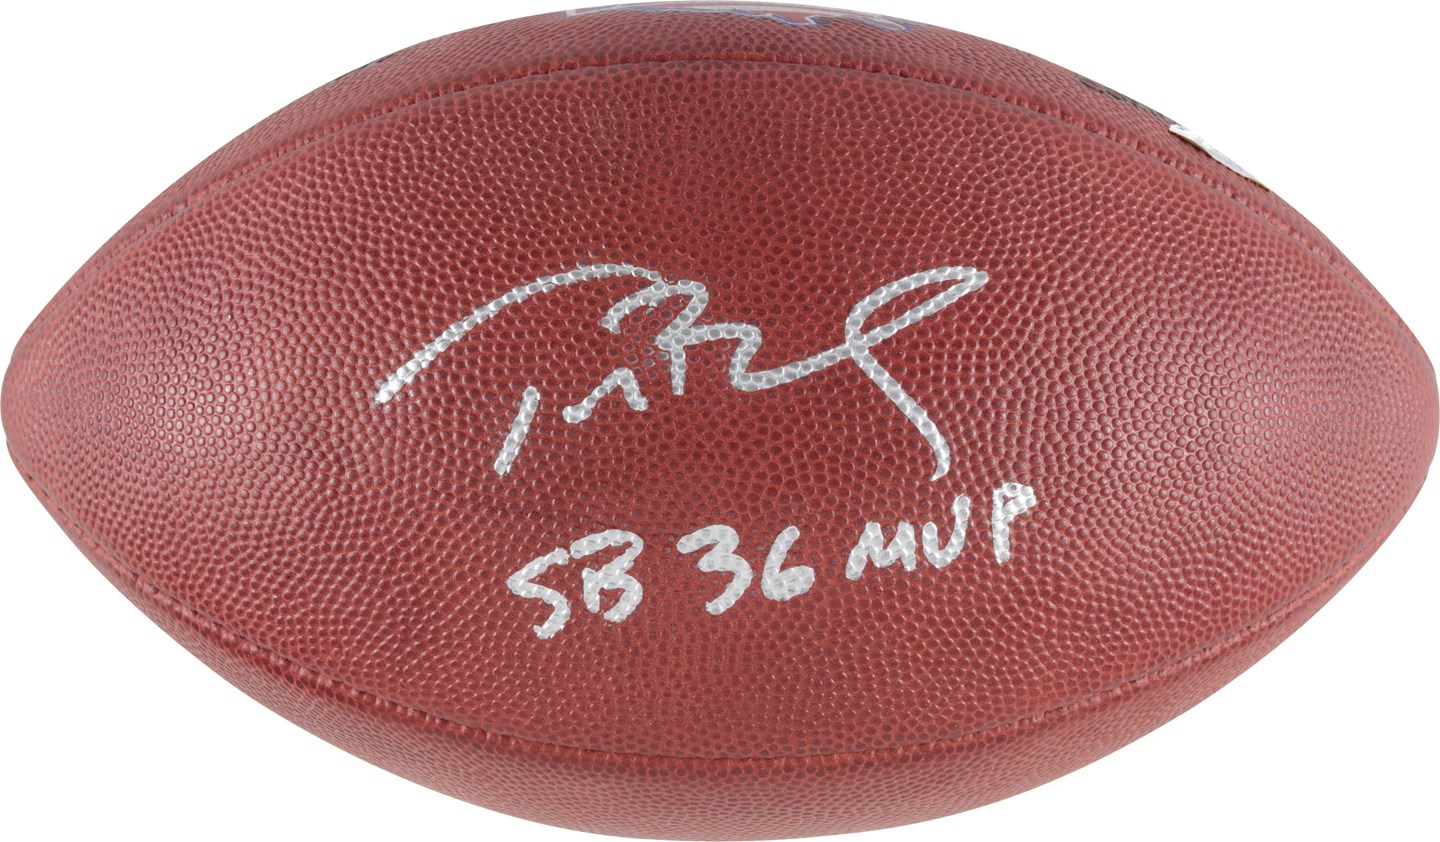 - 2002 Tom Brady Signed Inscribed "SB 36 MVP" Super Bowl XXXVI Game Used Football - Brady's First Championship (NFL PSA & Tristar)